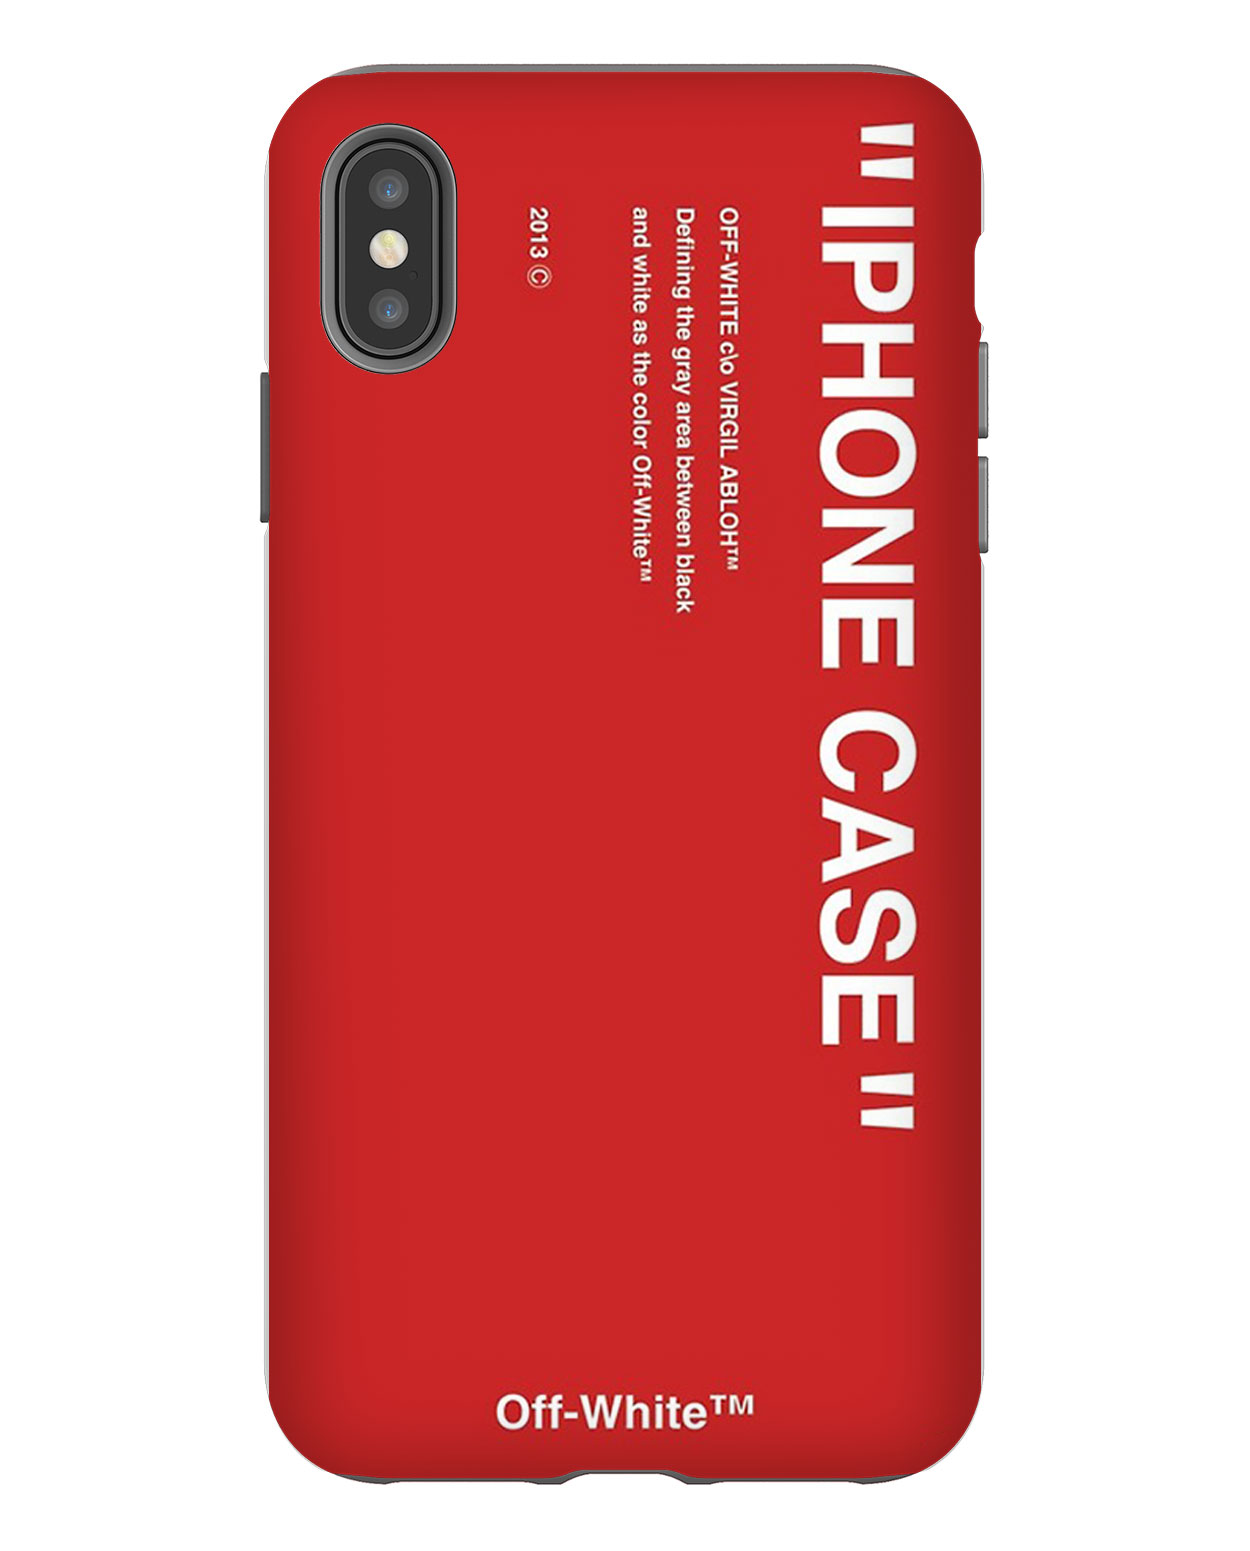 Onbekwaamheid Makkelijk in de omgang Lucky Off White Red Background iPhone Case 7/7 Plus,8/8 Plus,X,XS,XR,XS,Max-  FEROLOS.COM